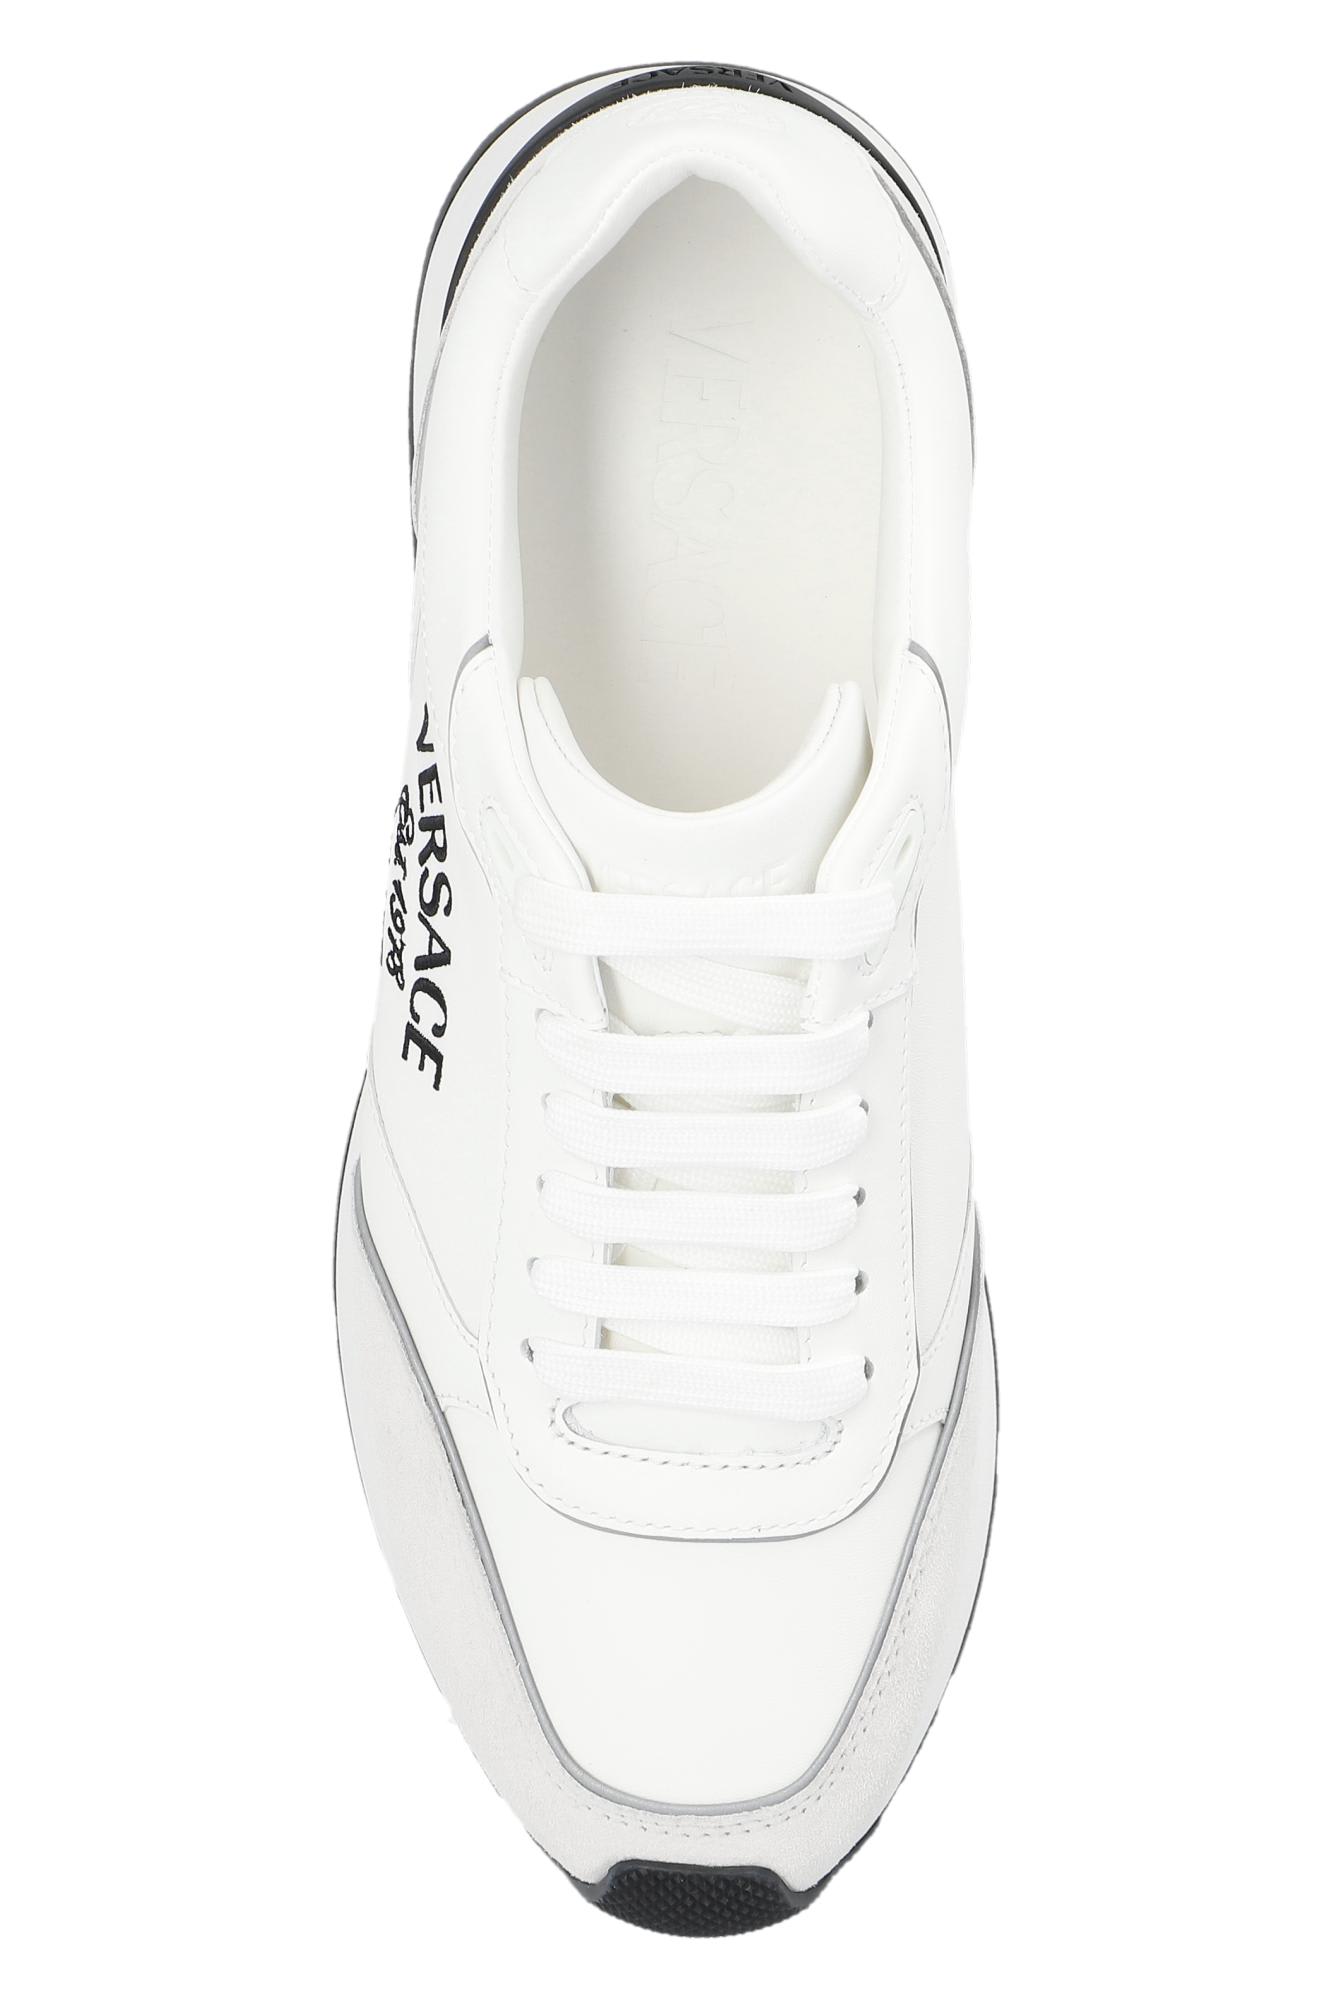 Shop Versace Milano Sneakers In Bianco